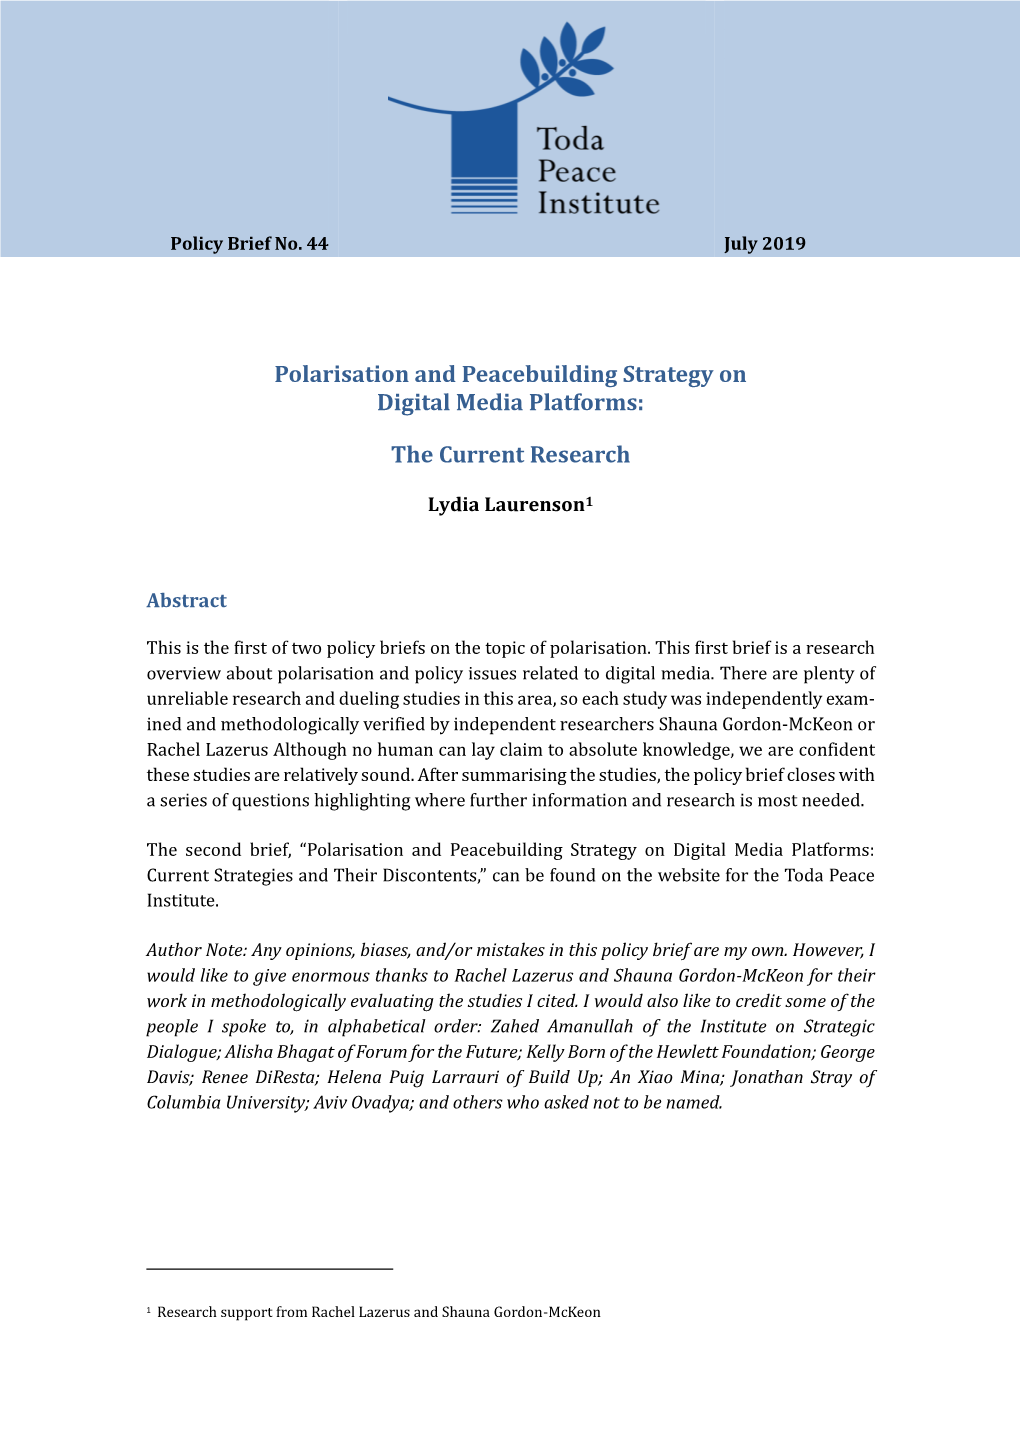 Polarisation and Peacebuilding Strategy on Digital Media Platforms